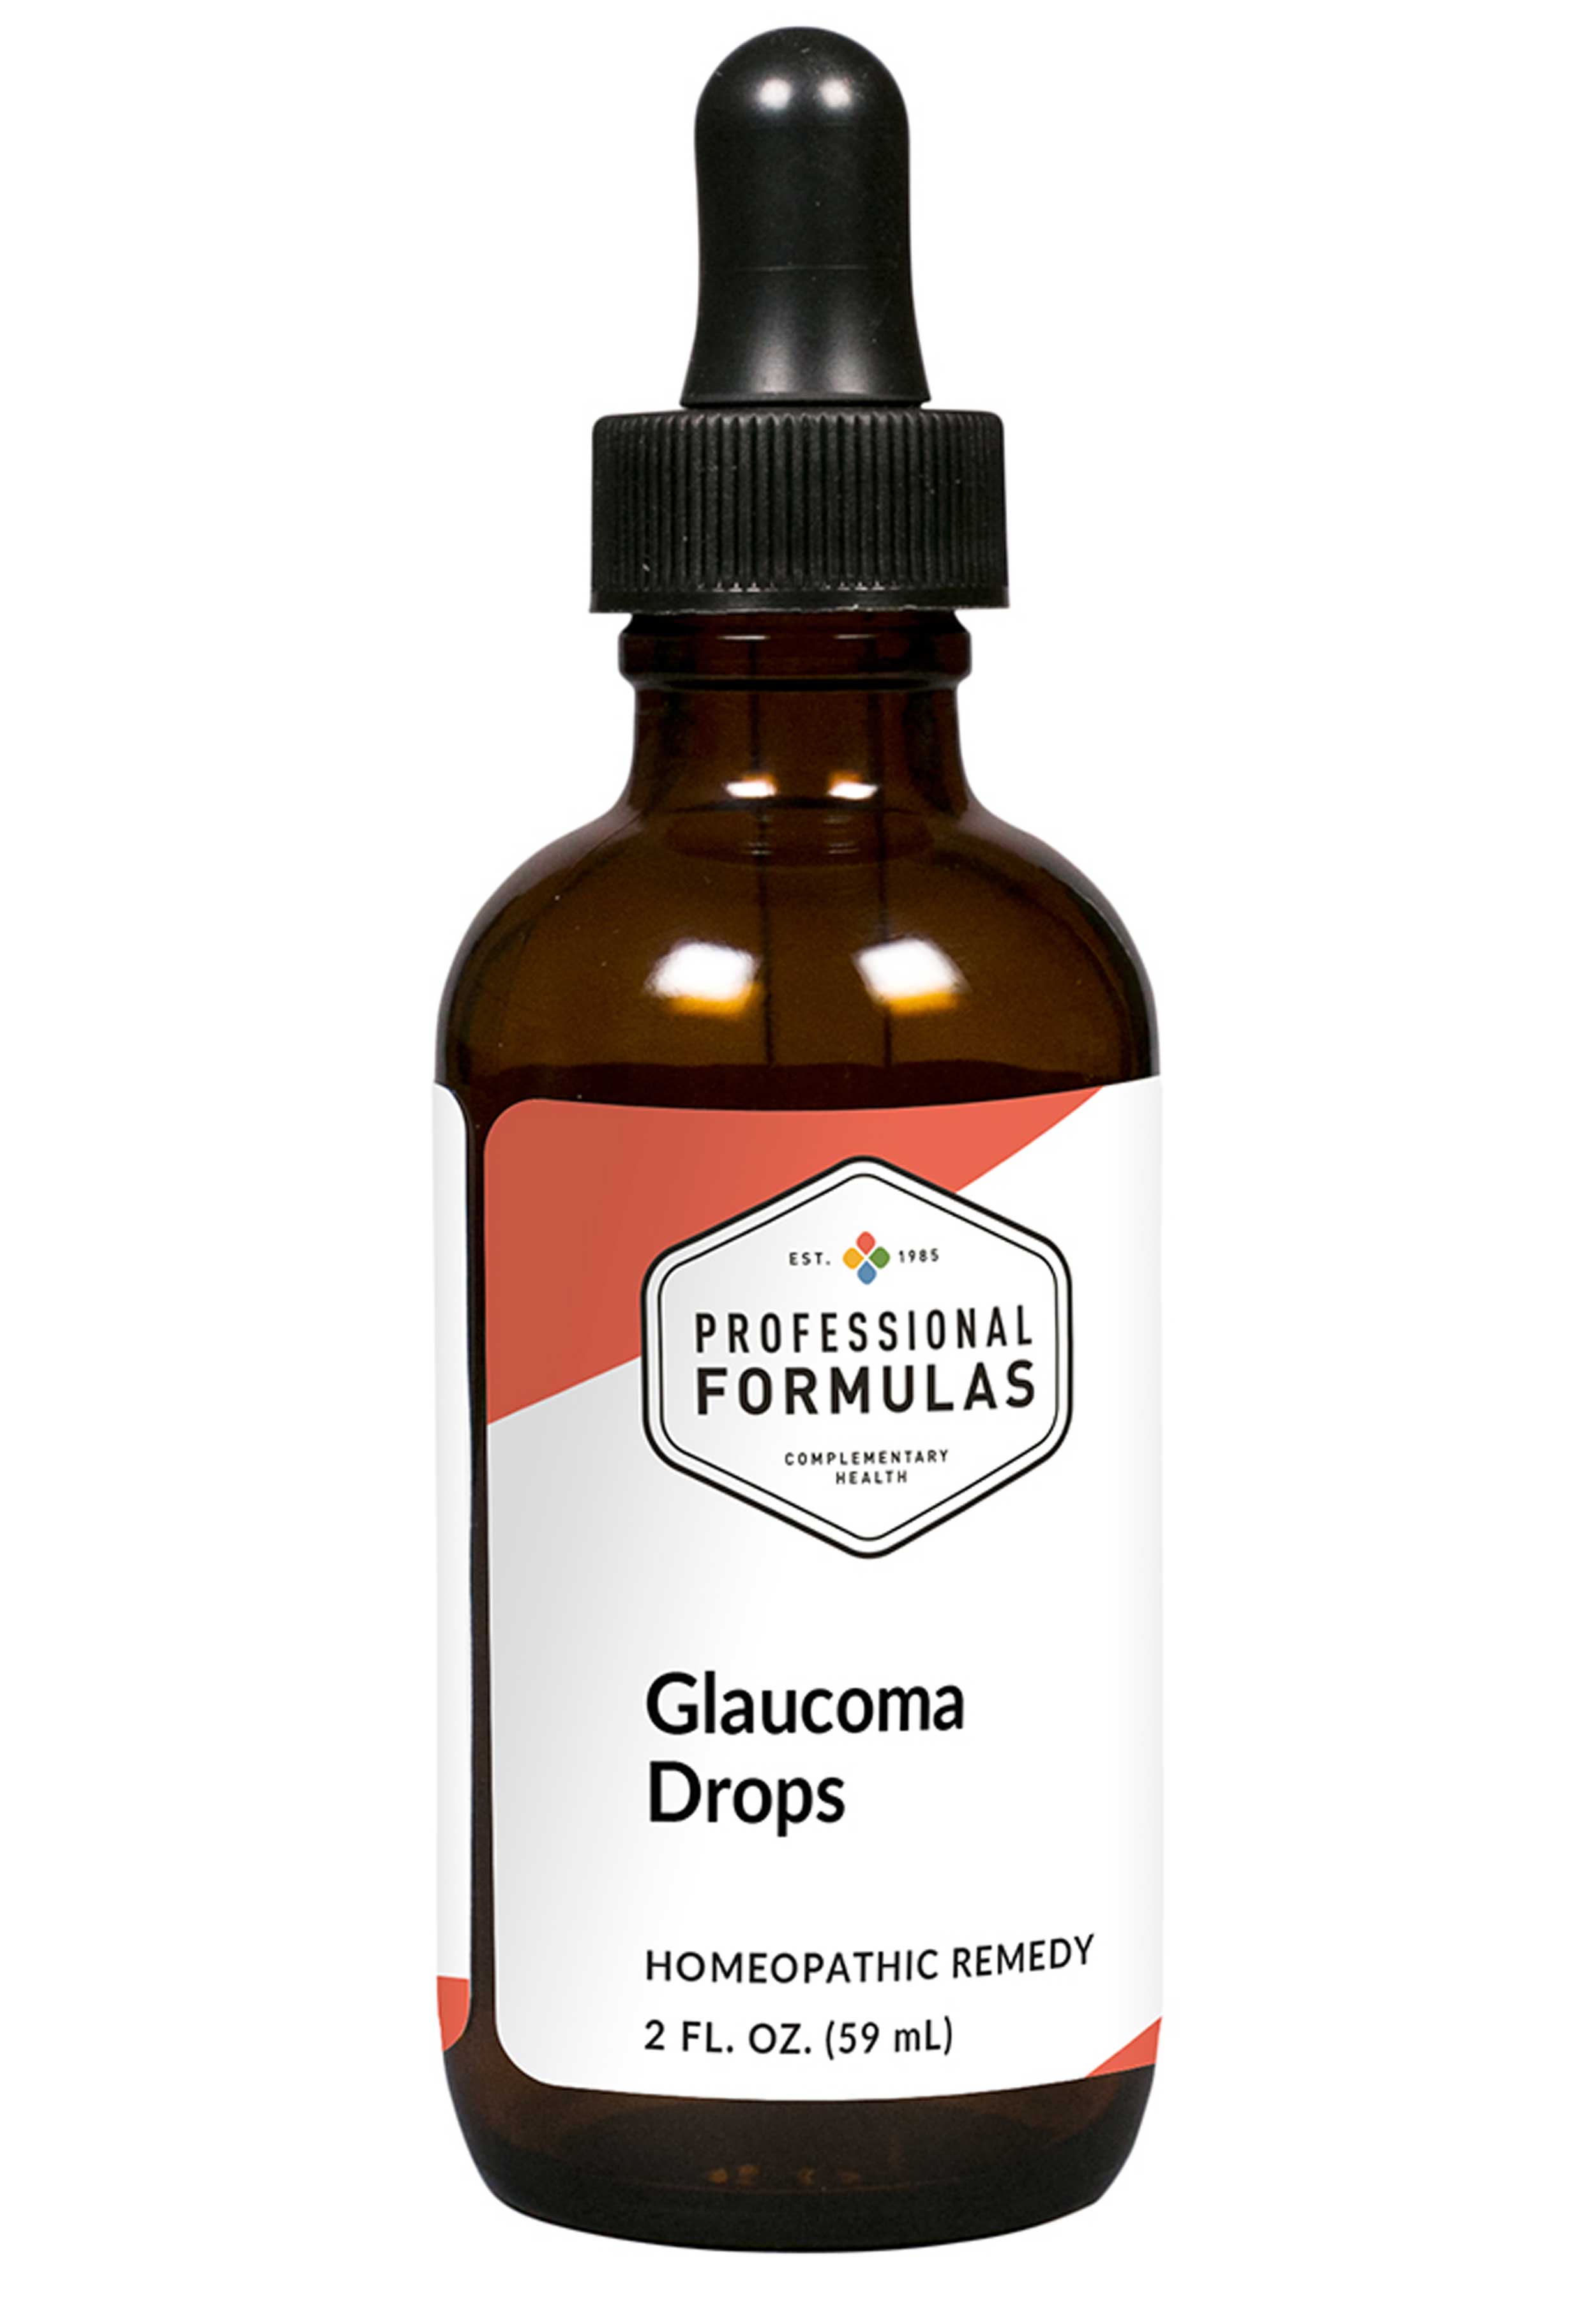 Professional Formulas Glaucoma Formula Drops